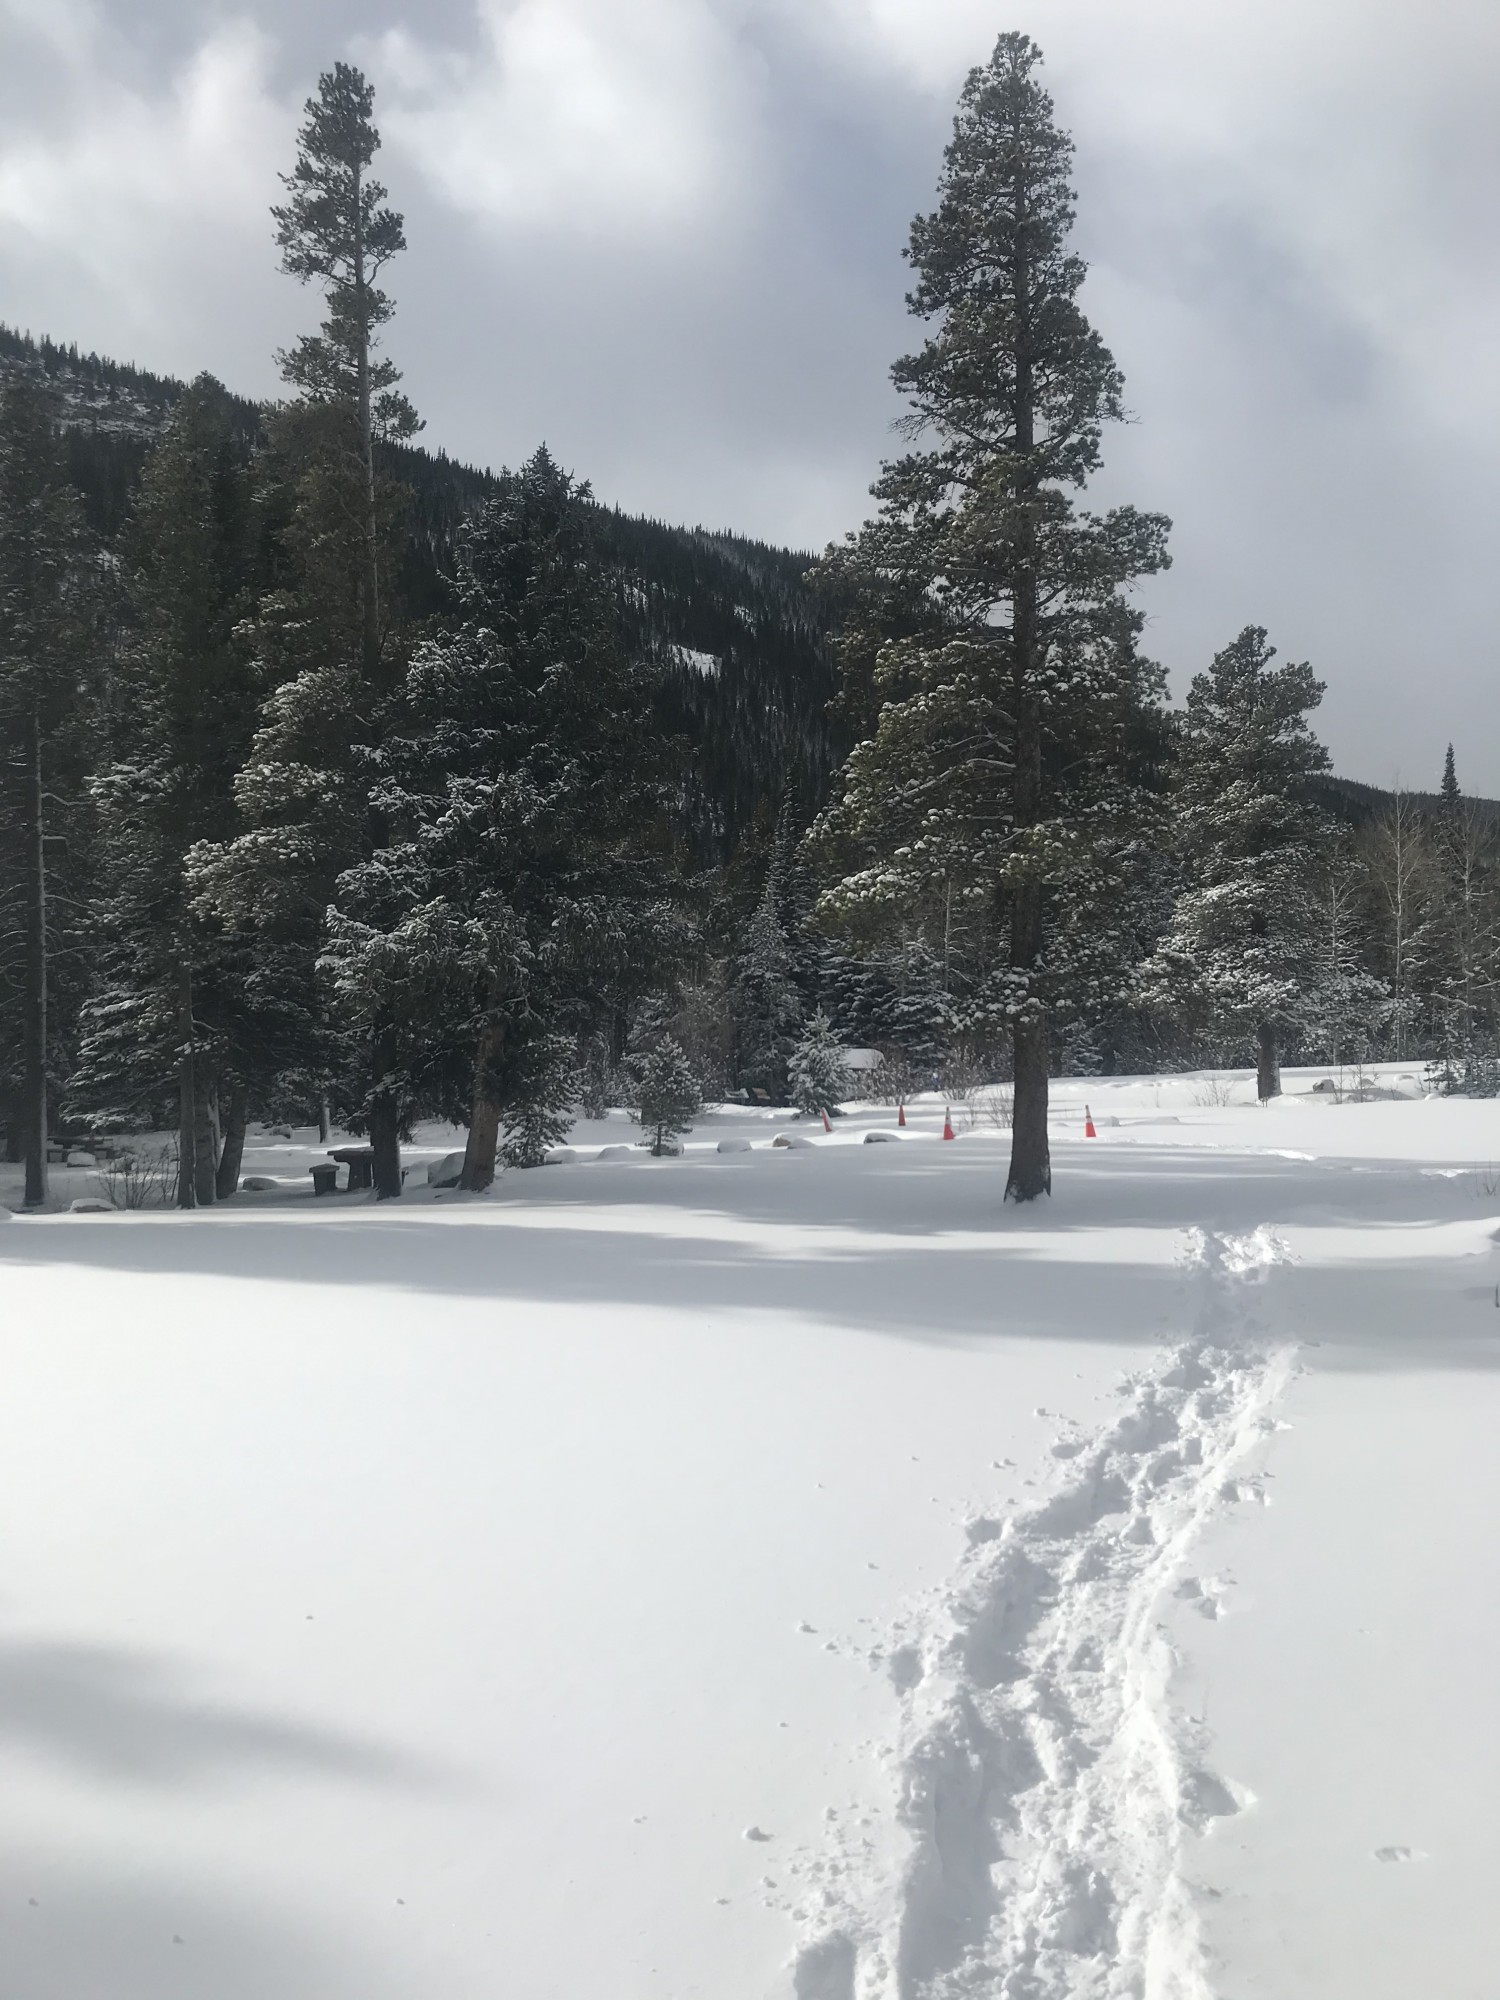 snowshoe tracks near trees and blue sky